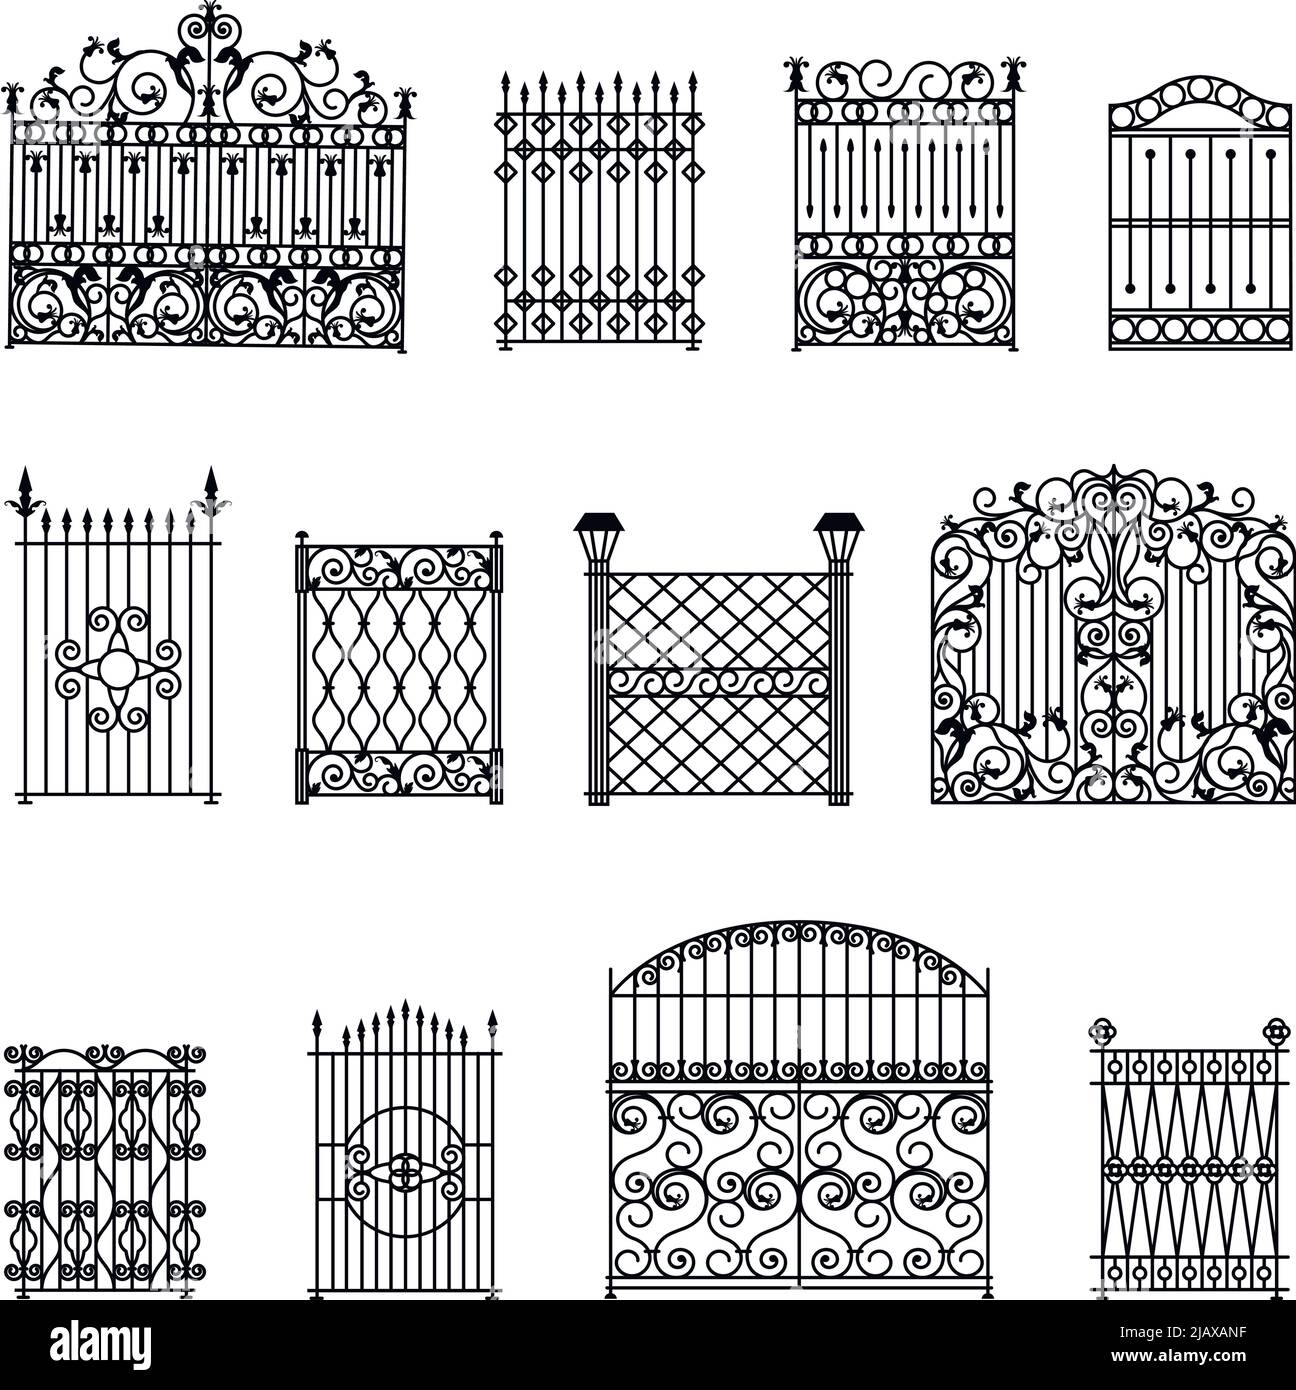 Decorative black white fences set with gates flat isolated vector illustration Stock Vector